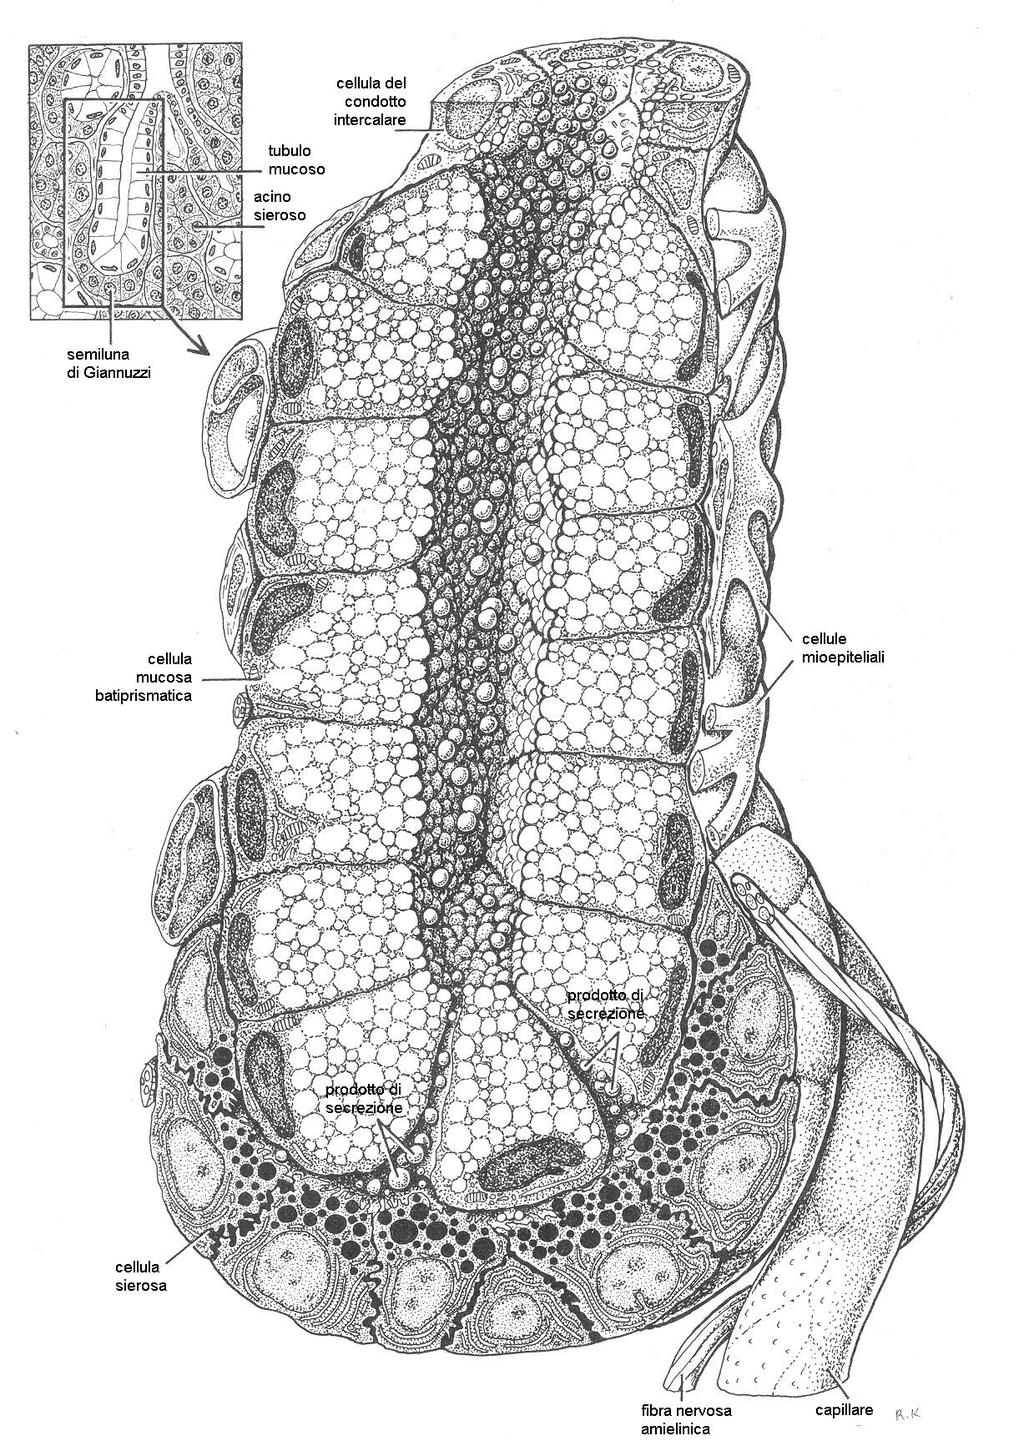 Giannuzzi cellula mucosa cellule mioepiteliali cellula